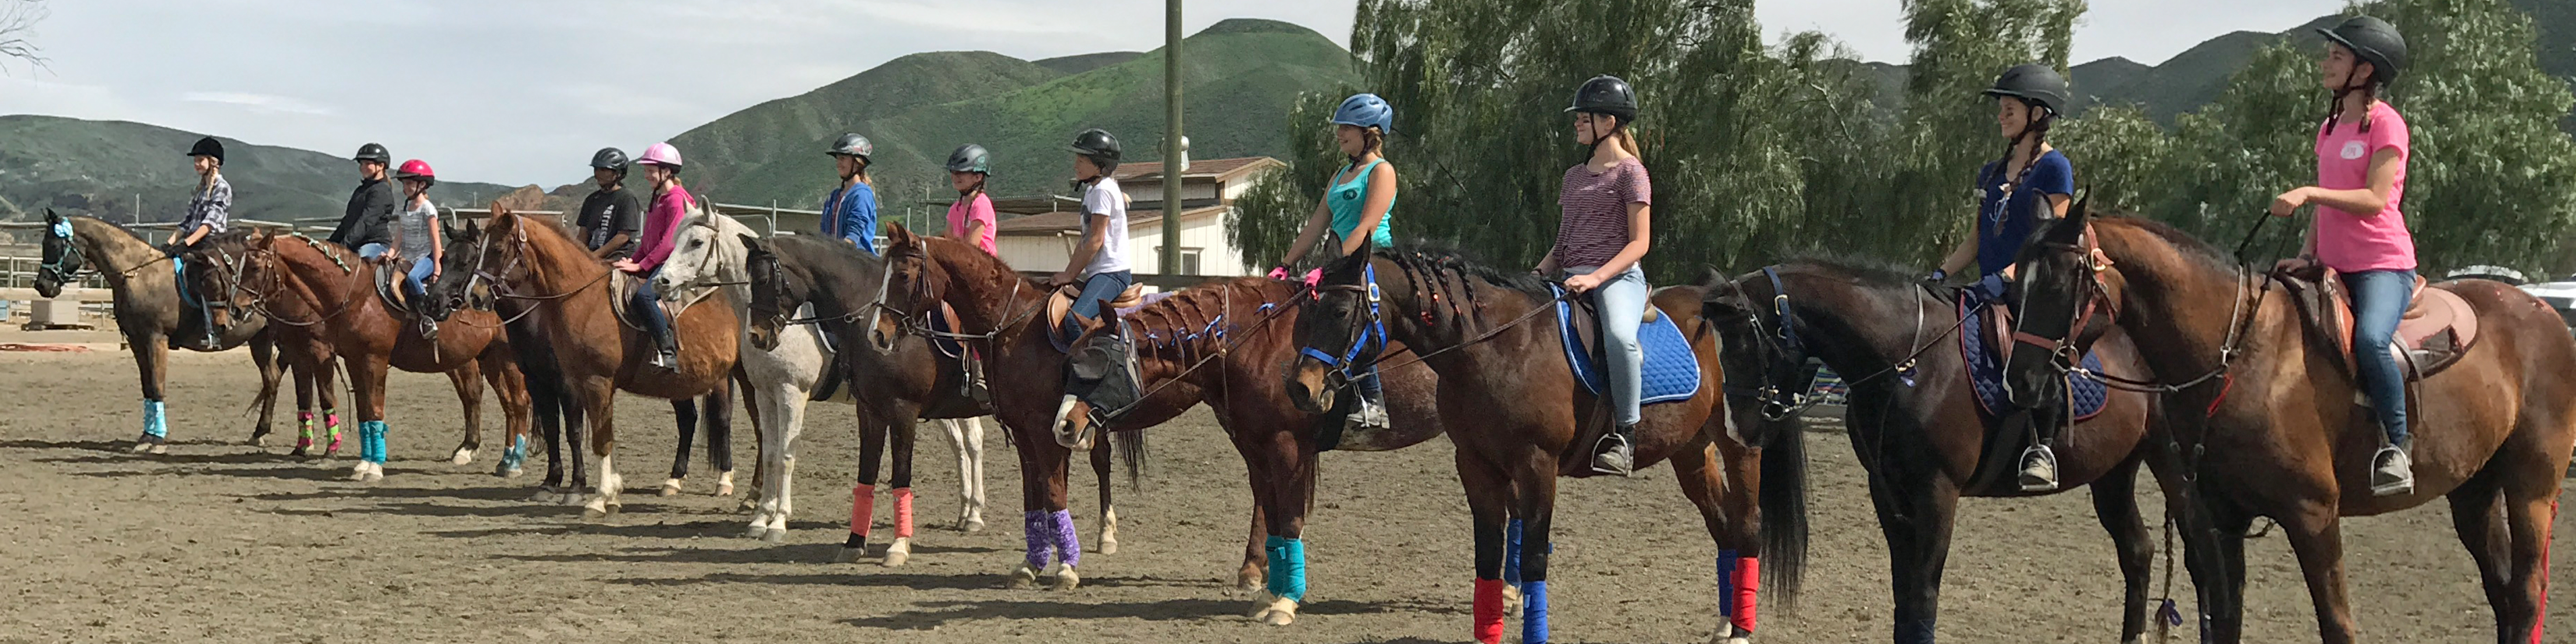 Horseback riding lessons in Temecula